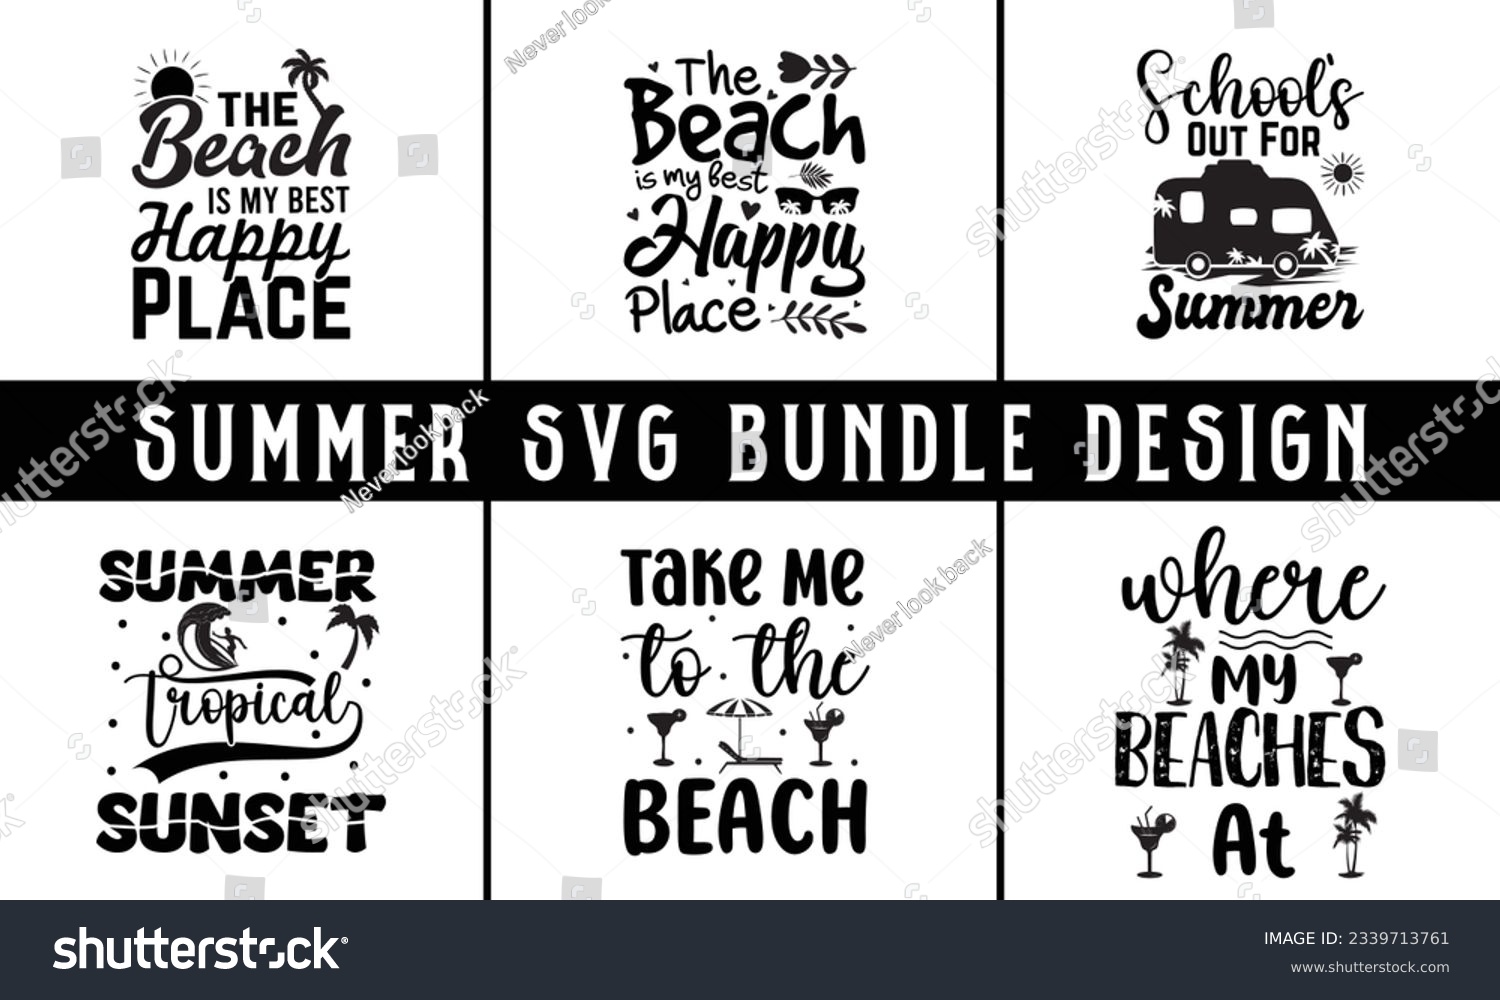 SVG of Summer SVG Bundle, T-shirt Design , Summer typography t shirt design vector ,Summer Bundle SVG Cut File, Beach Life SVG, Sweet Summertime Quote Design, Summer SVG design, White background svg